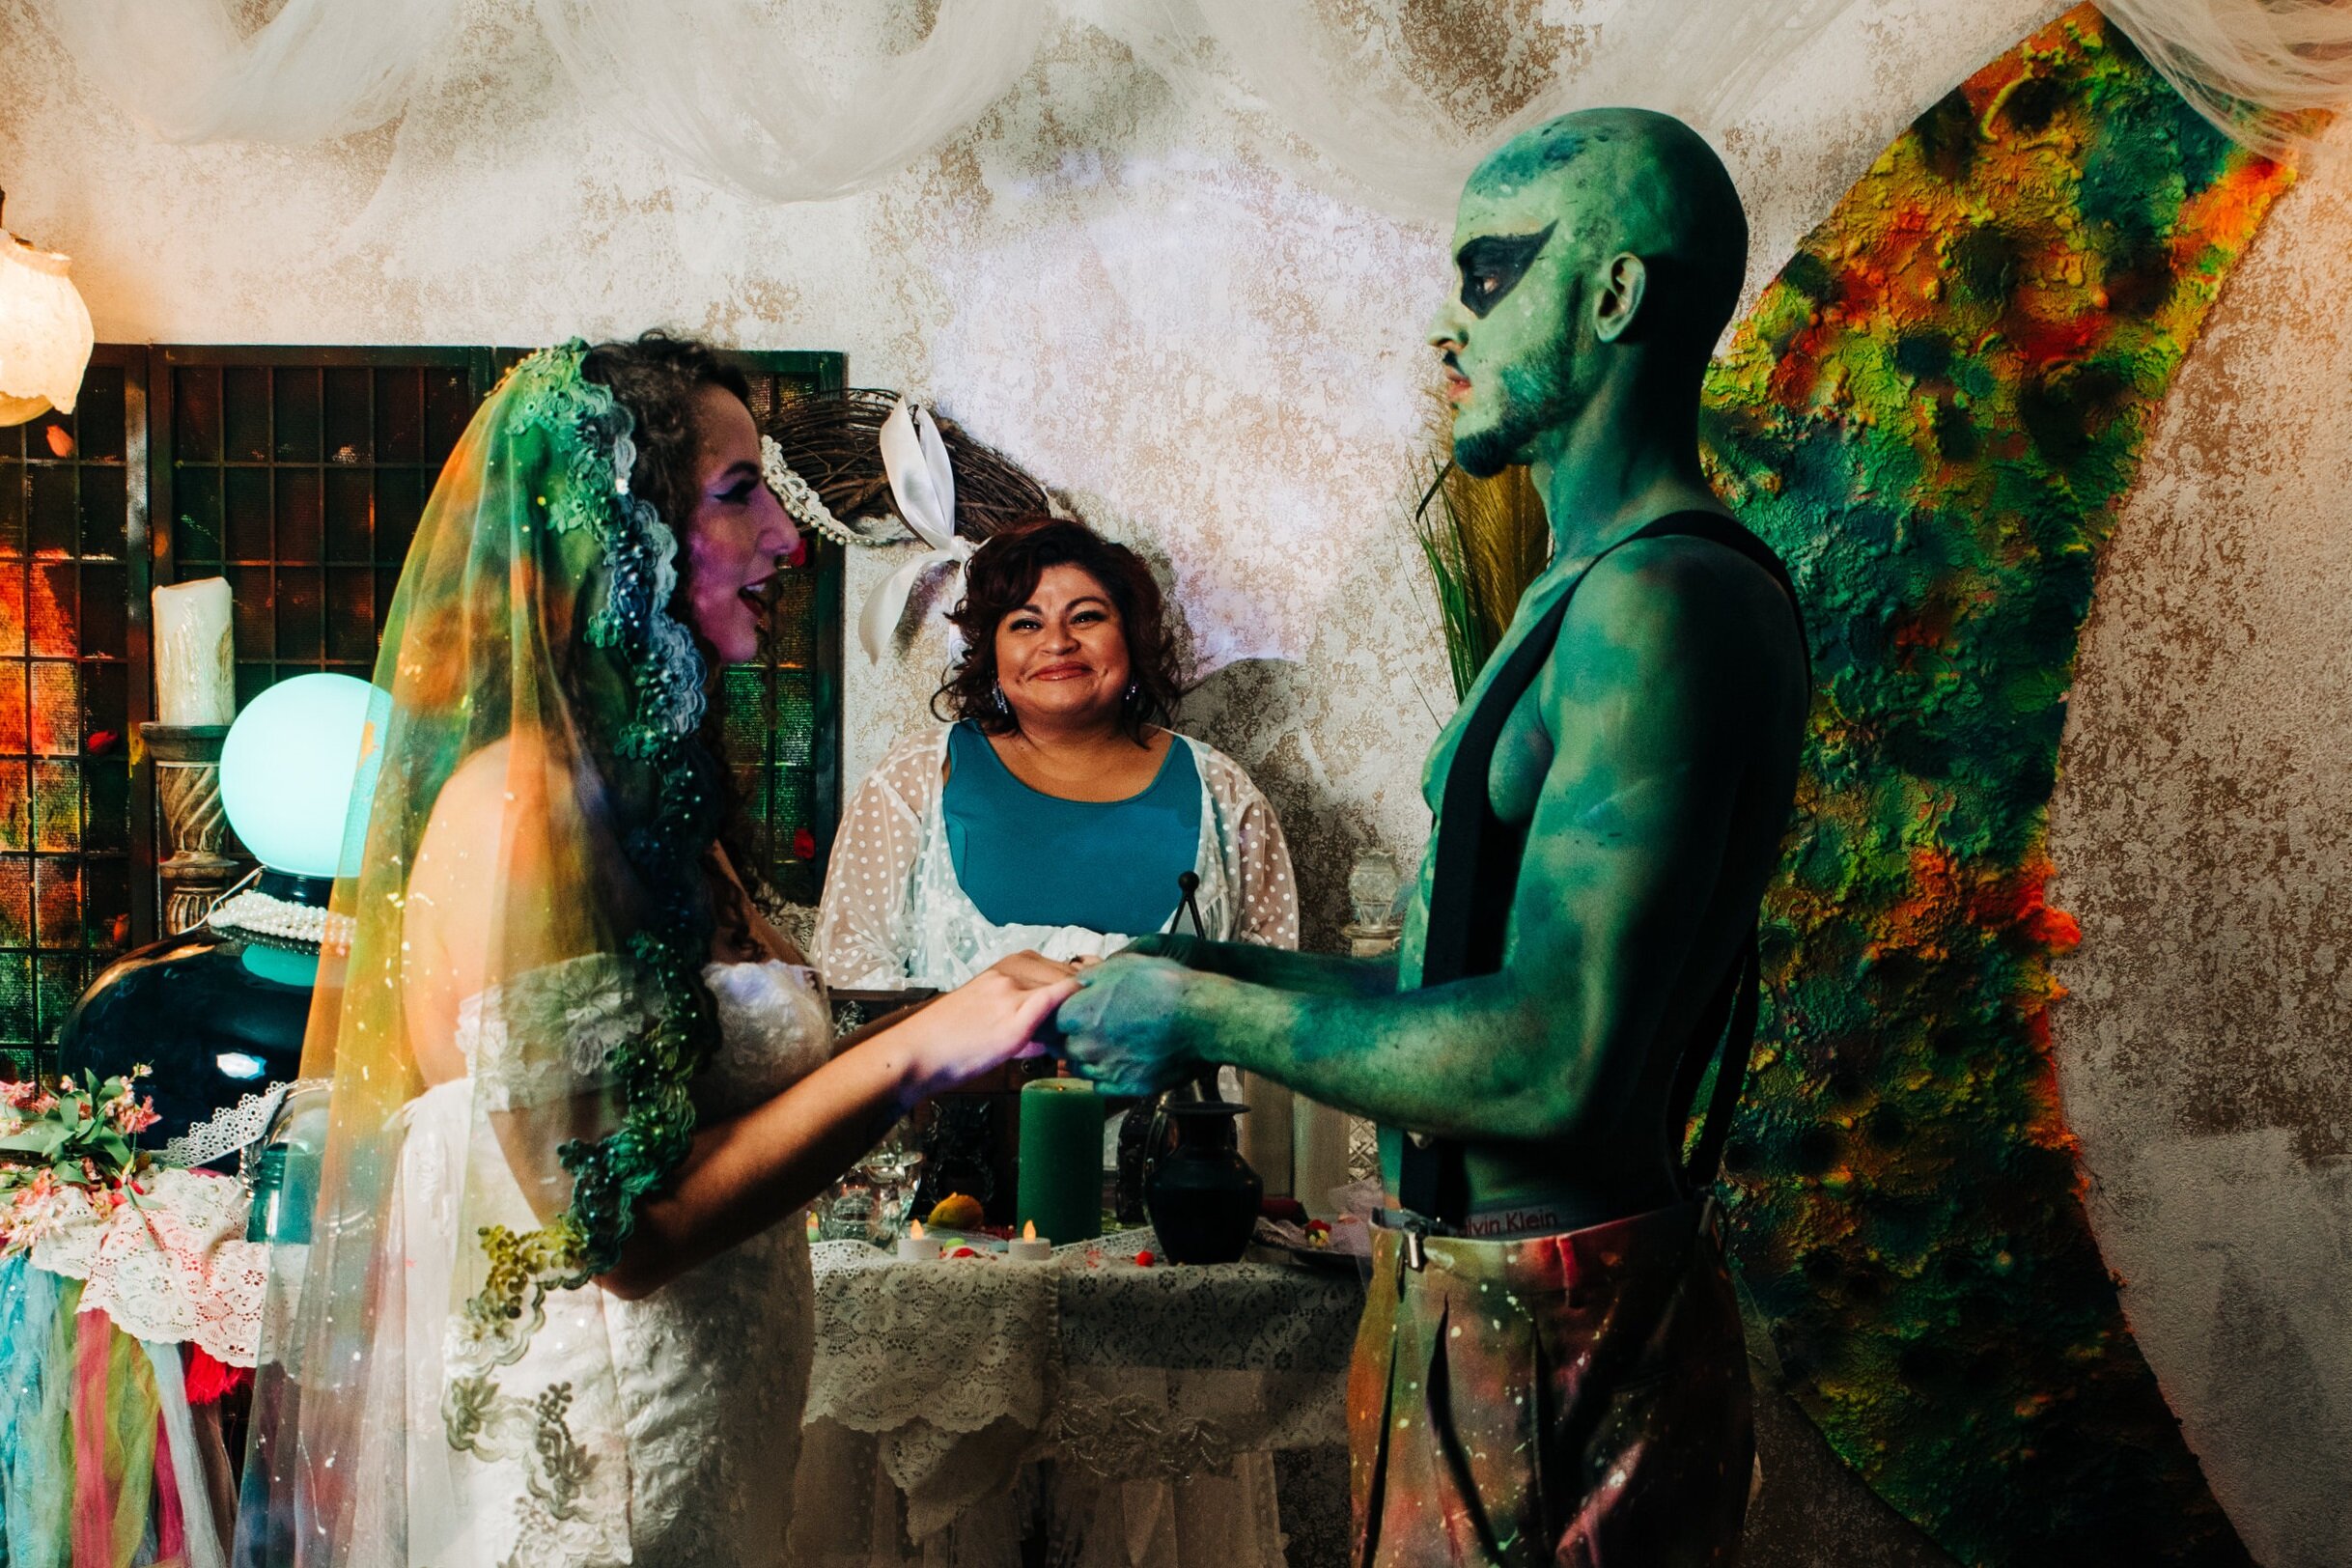 Alien Cosmic Wedding Officiated by The Love Officiant Renee Reyes